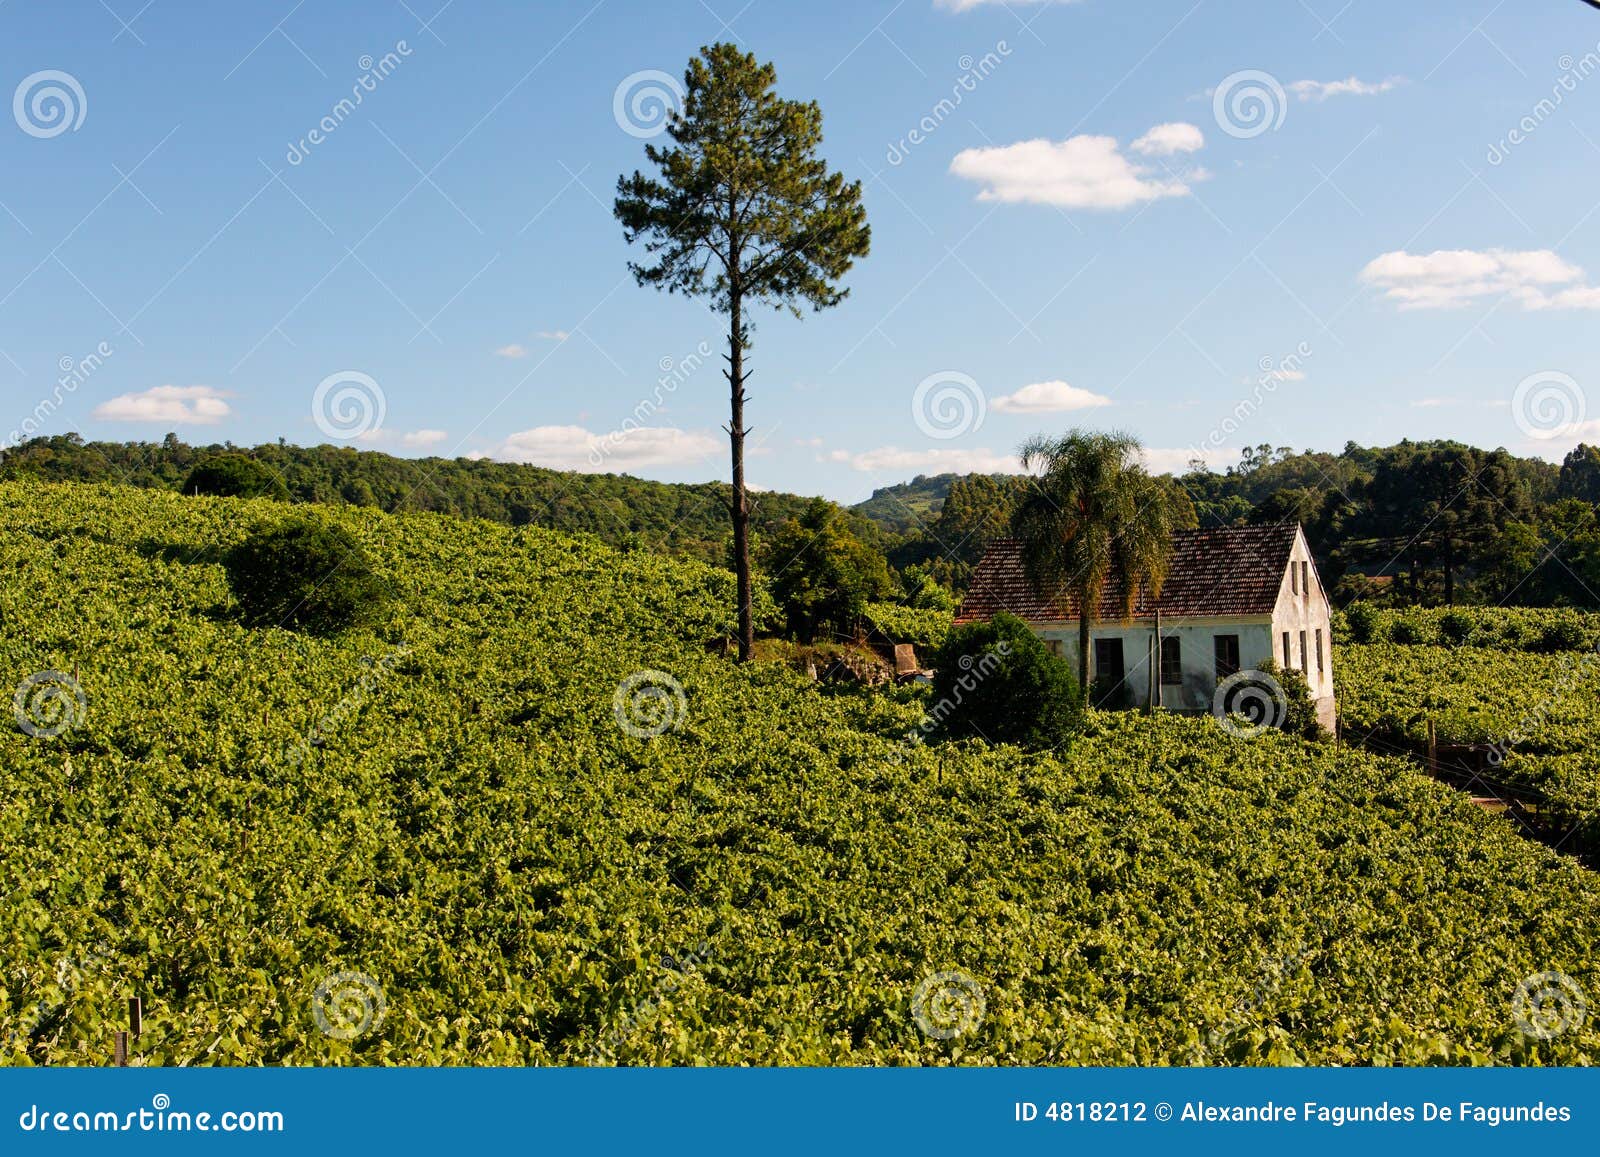 vale dos vinhedos vineyards bento goncalves